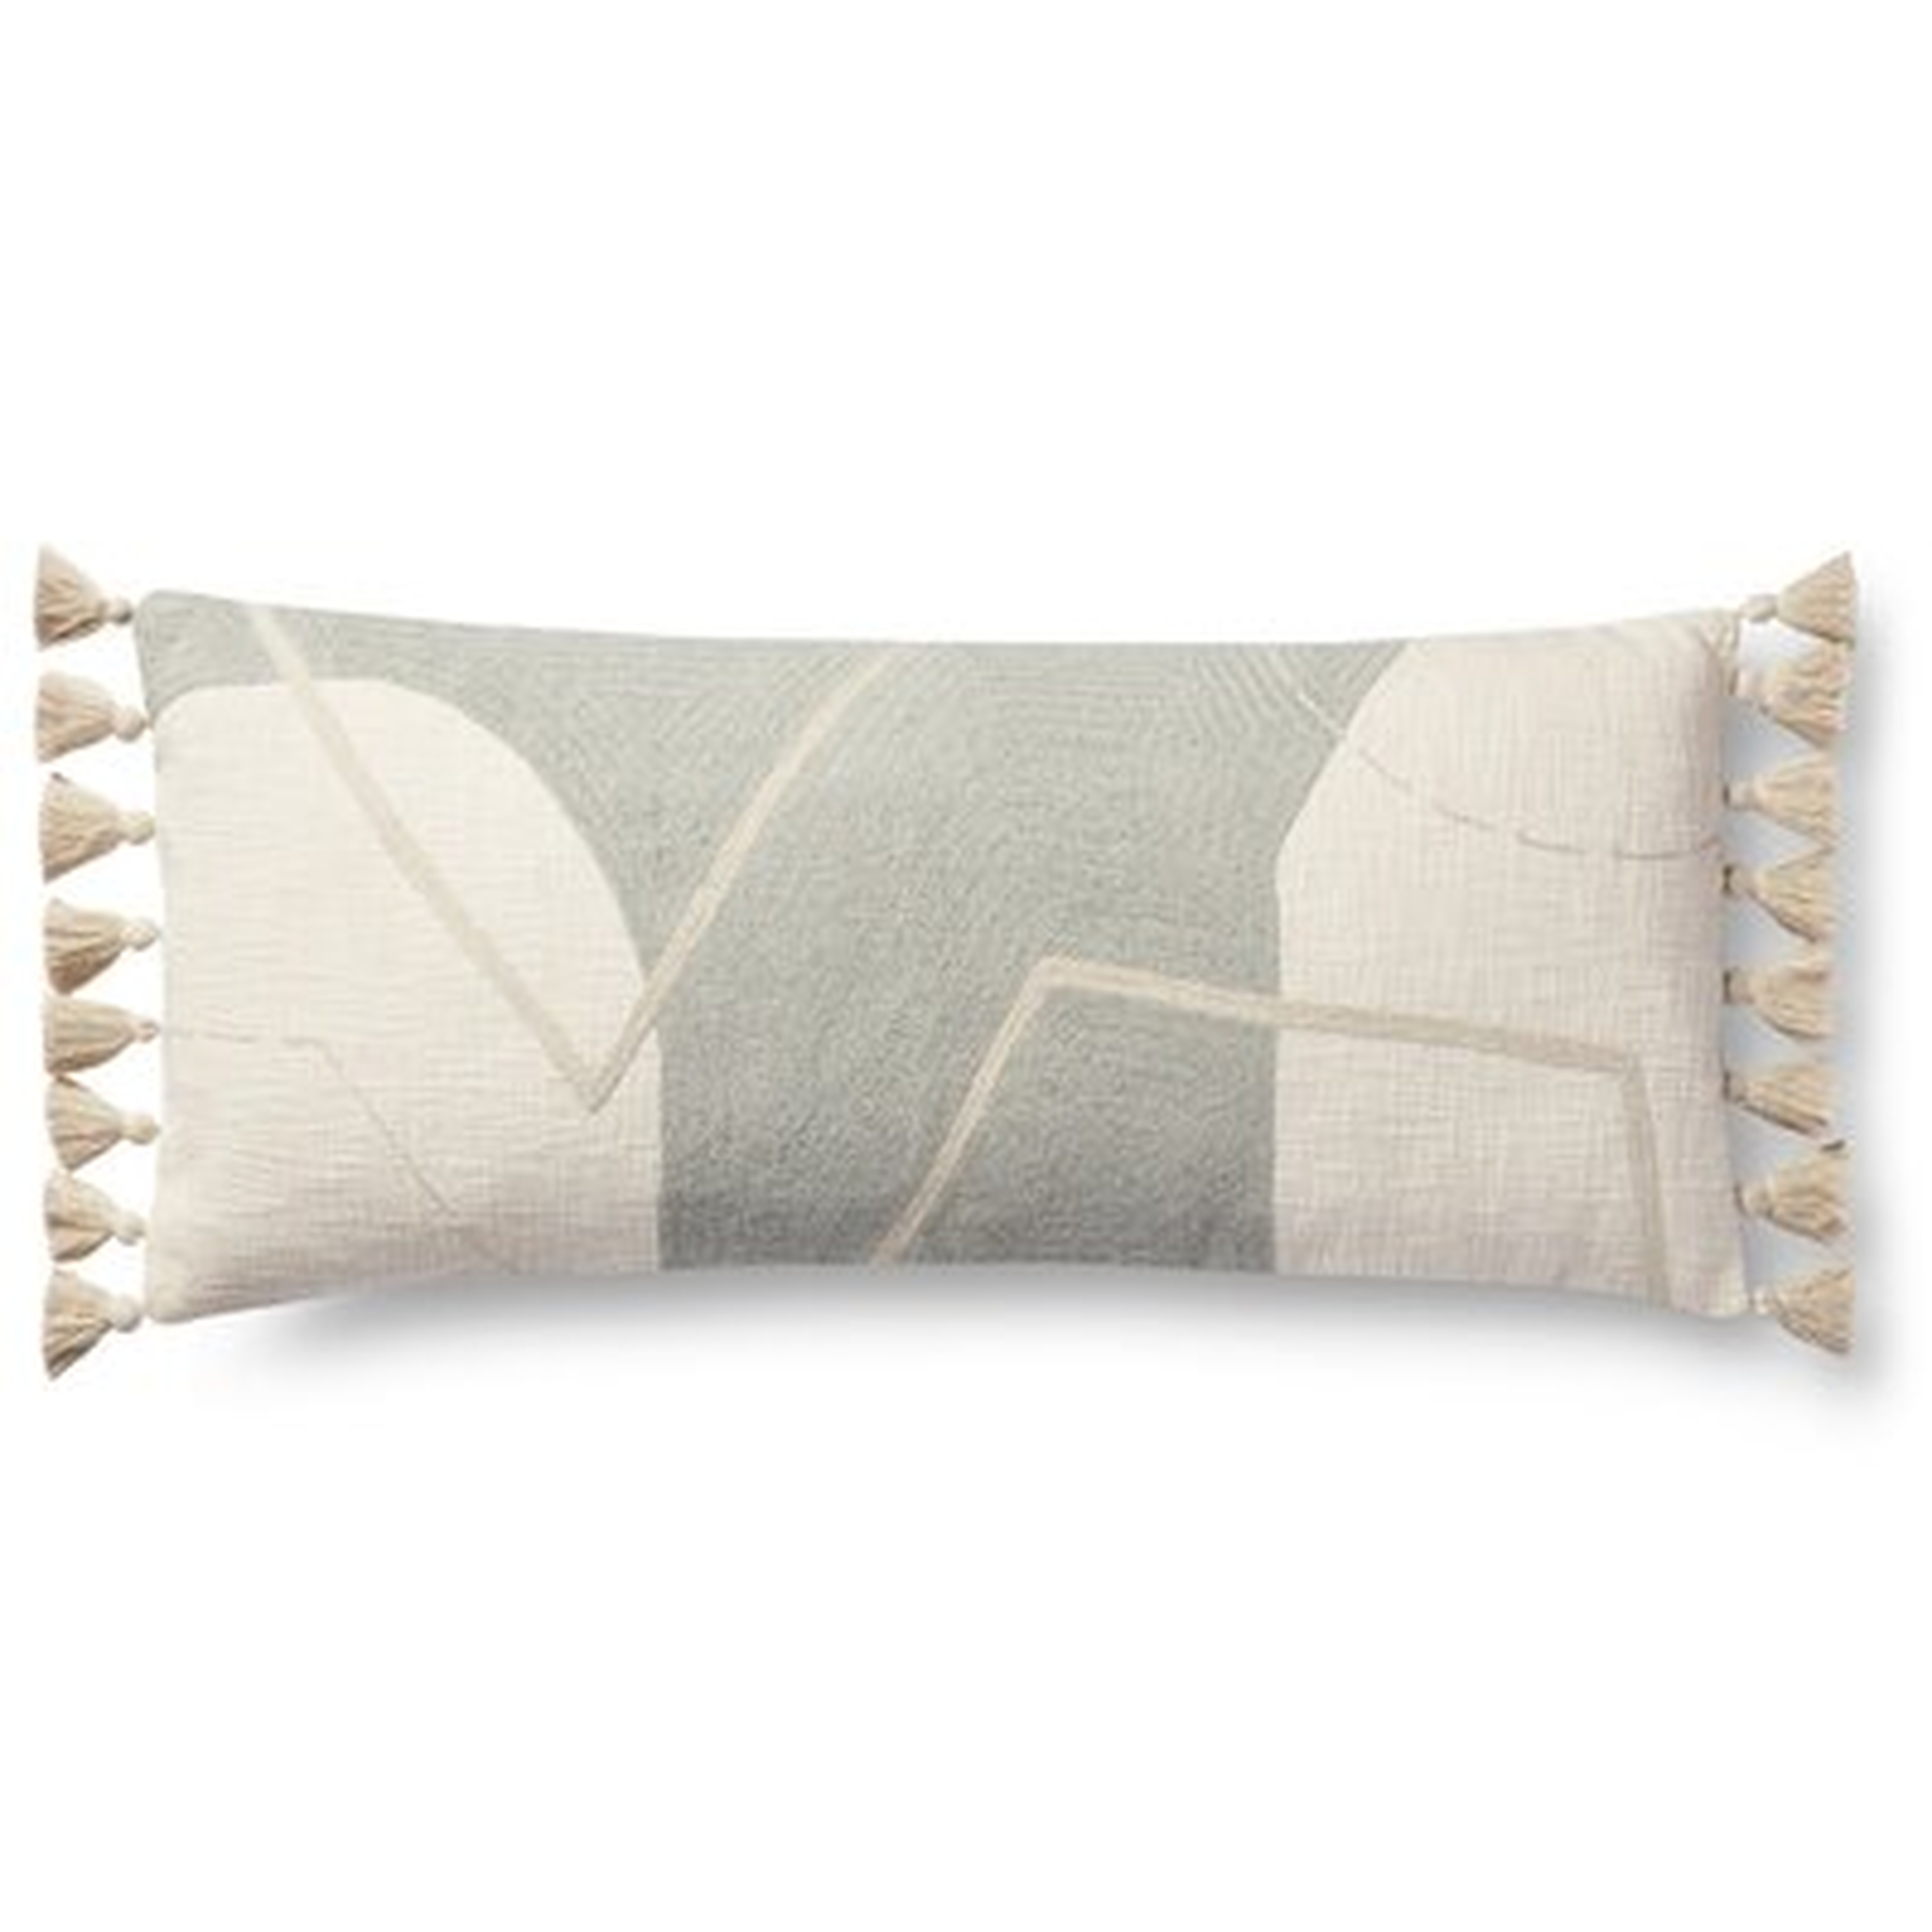 Decorative Rectangular Cotton Pillow Cover and Down Blend Insert - AllModern